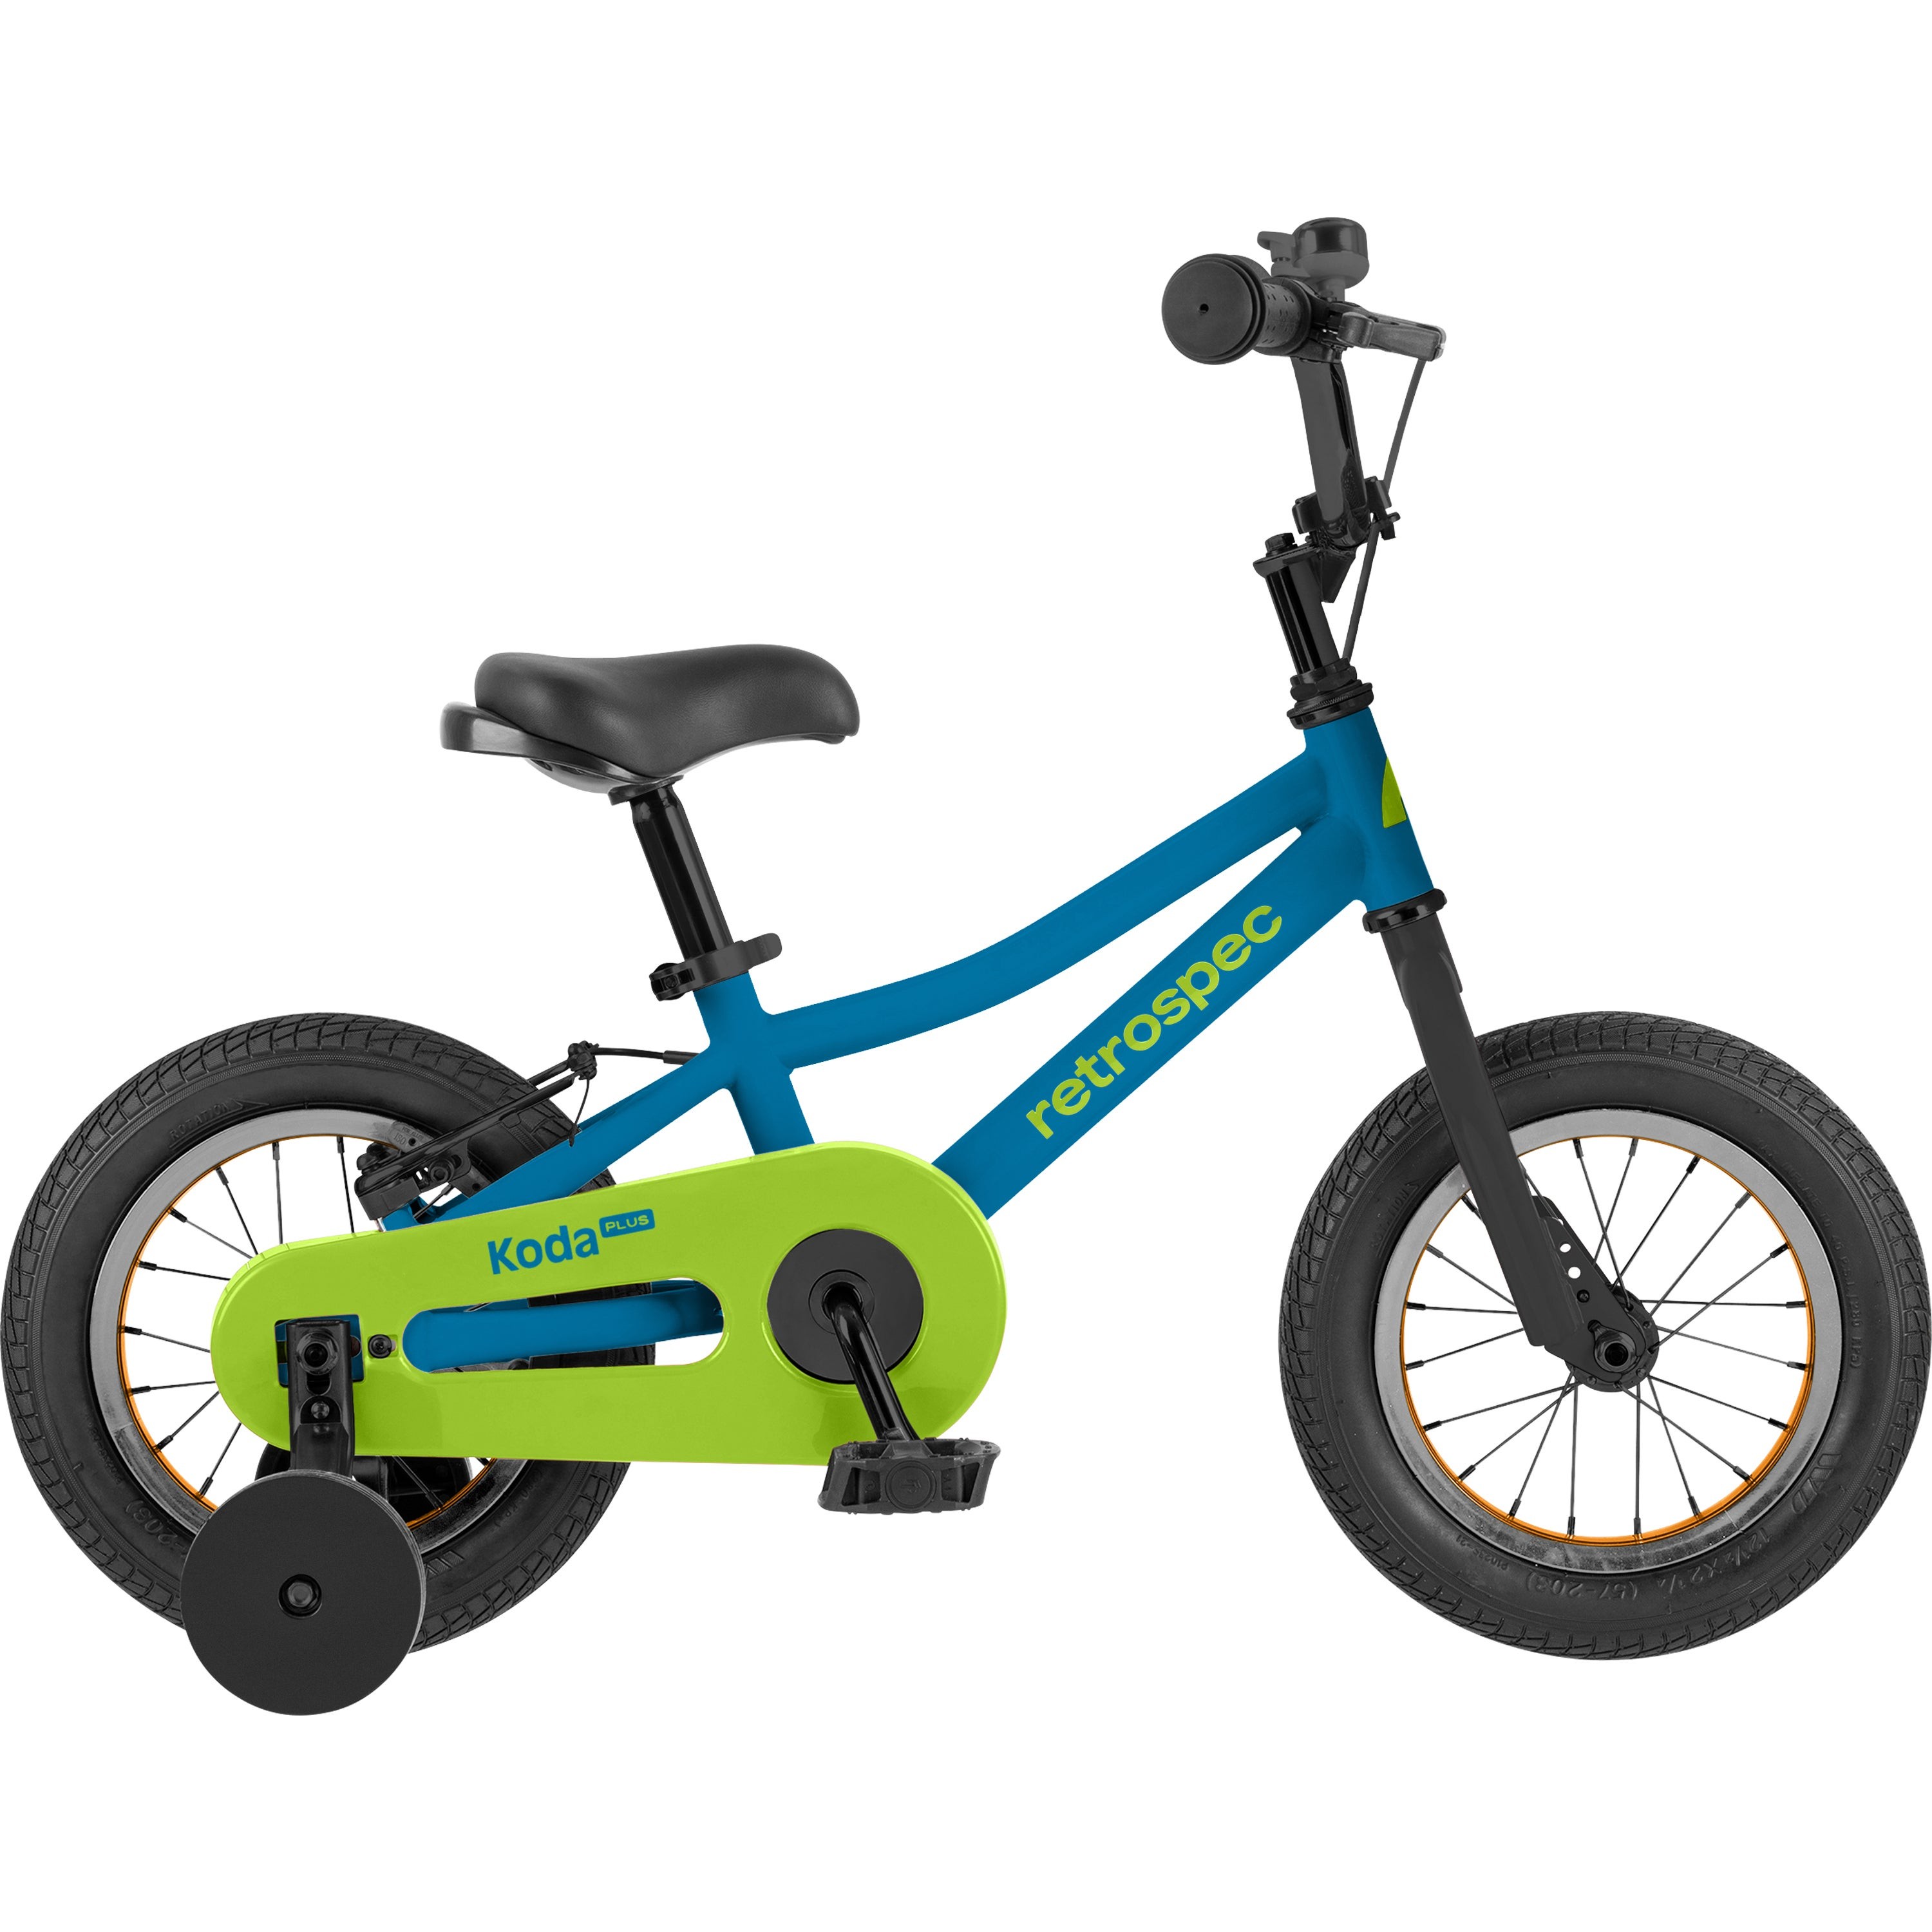 Koda Plus 12" Kids' Bike - Ages 2-3 Years, Brash Blue